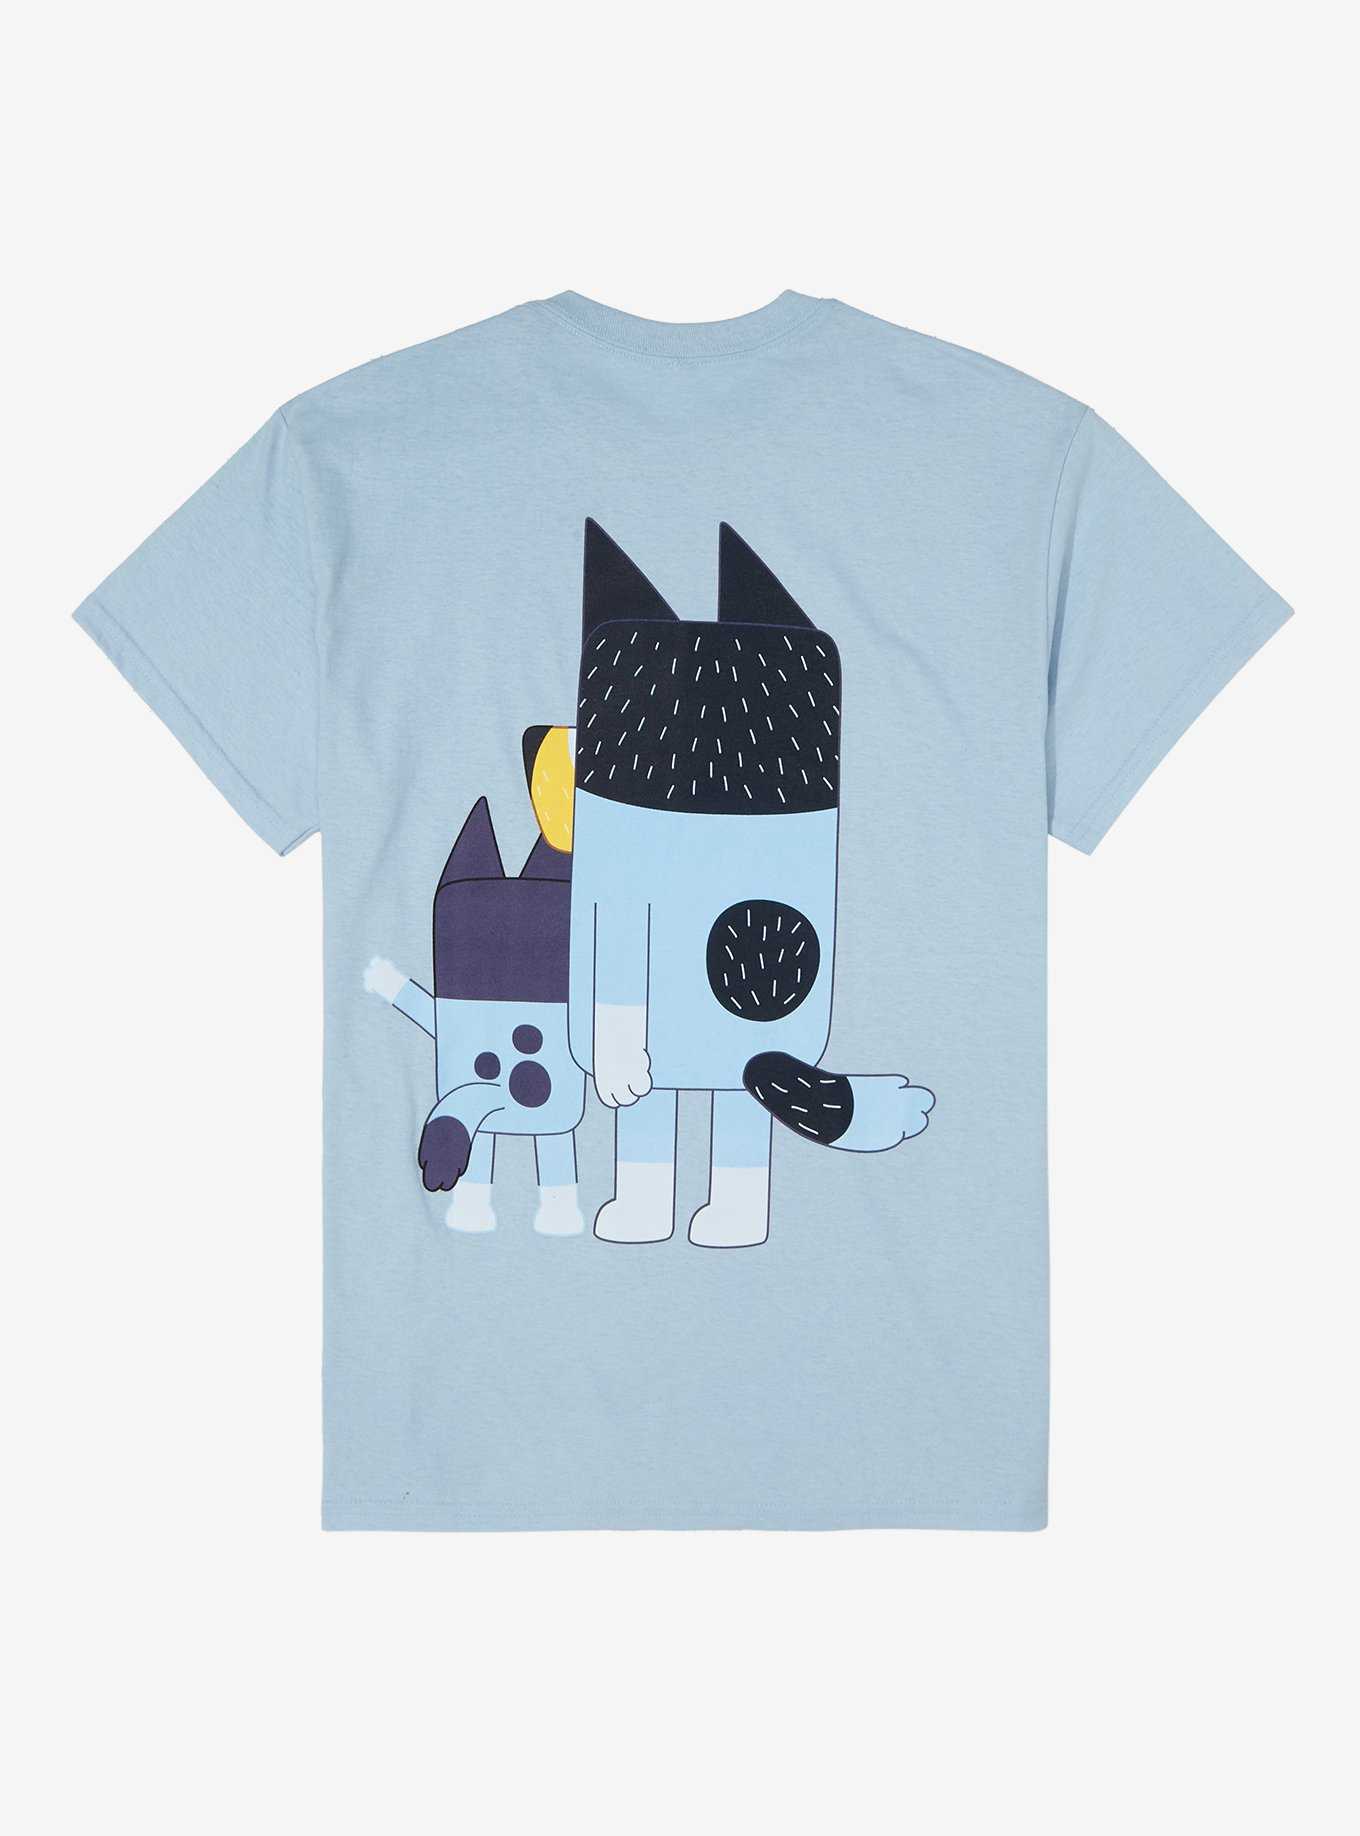 Bluey Bandit & Bluey Boyfriend Fit Girls T-Shirt, , hi-res